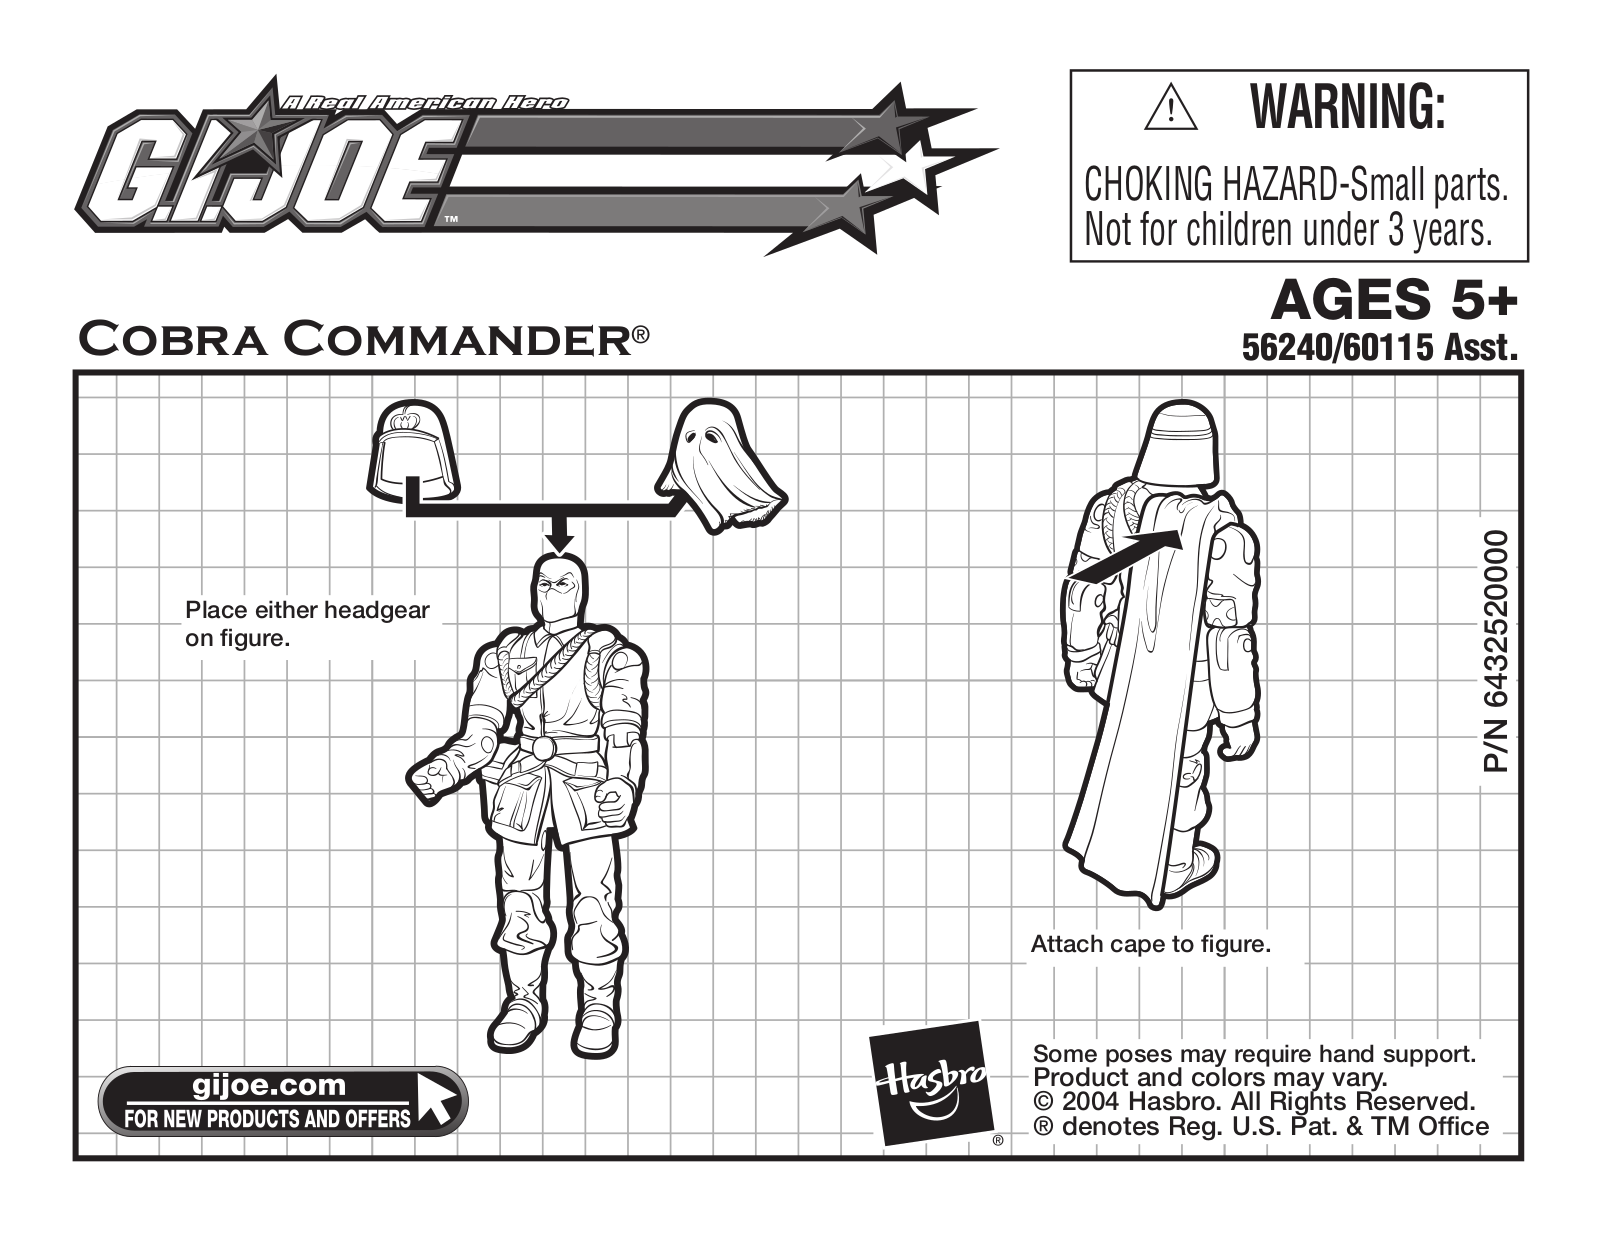 HASBRO GI Joe Link Talbot and Cobra Commander User Manual